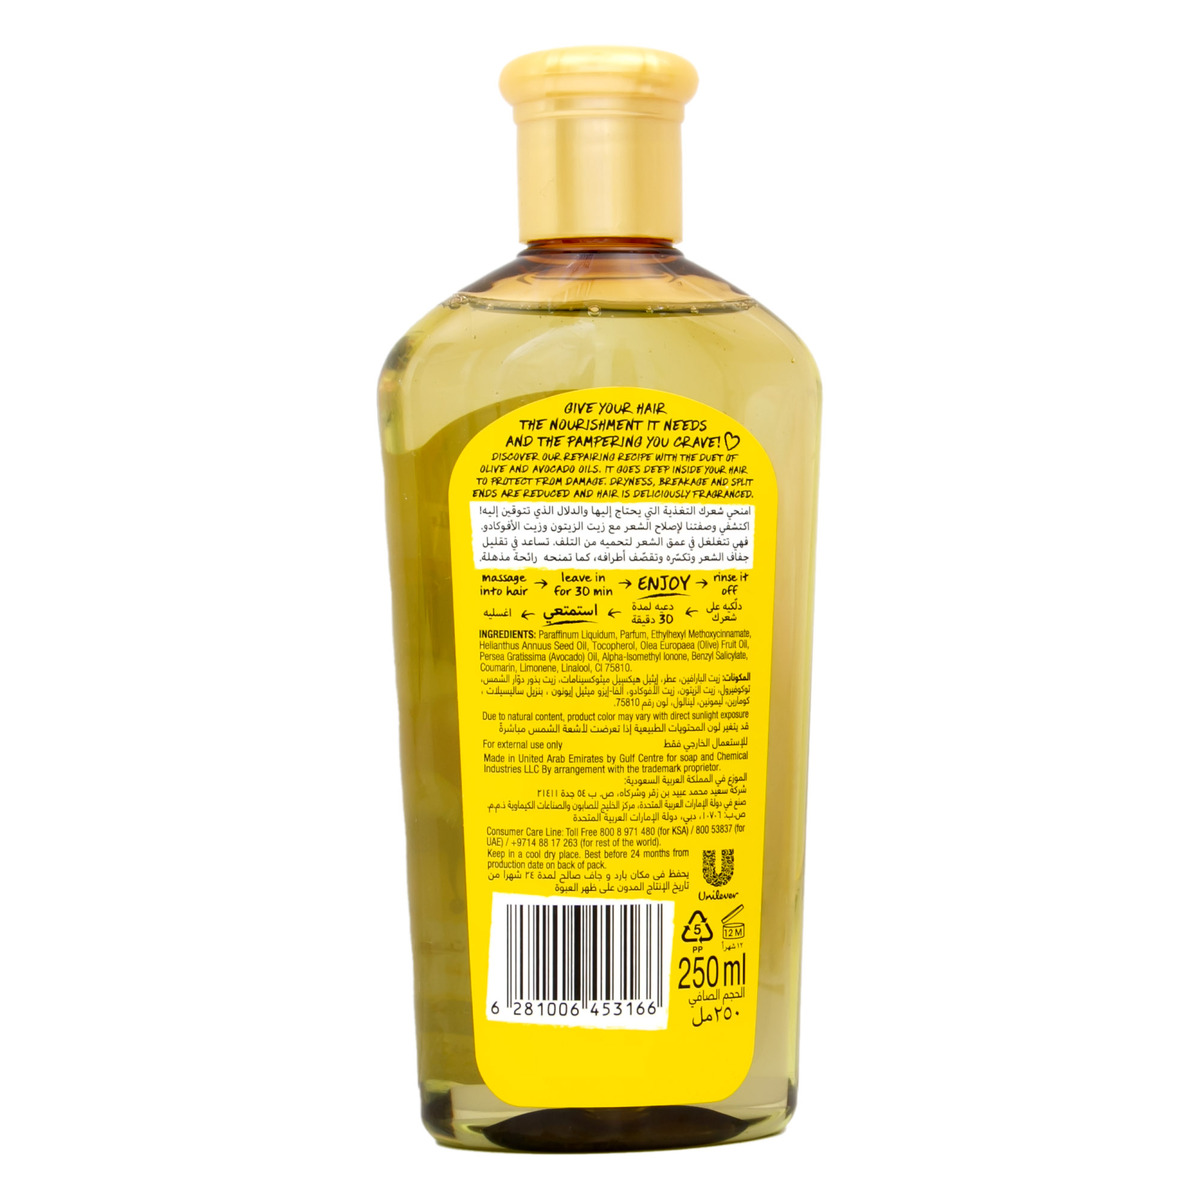 Sunsilk Olive & Avocado Hair Oil 250 ml